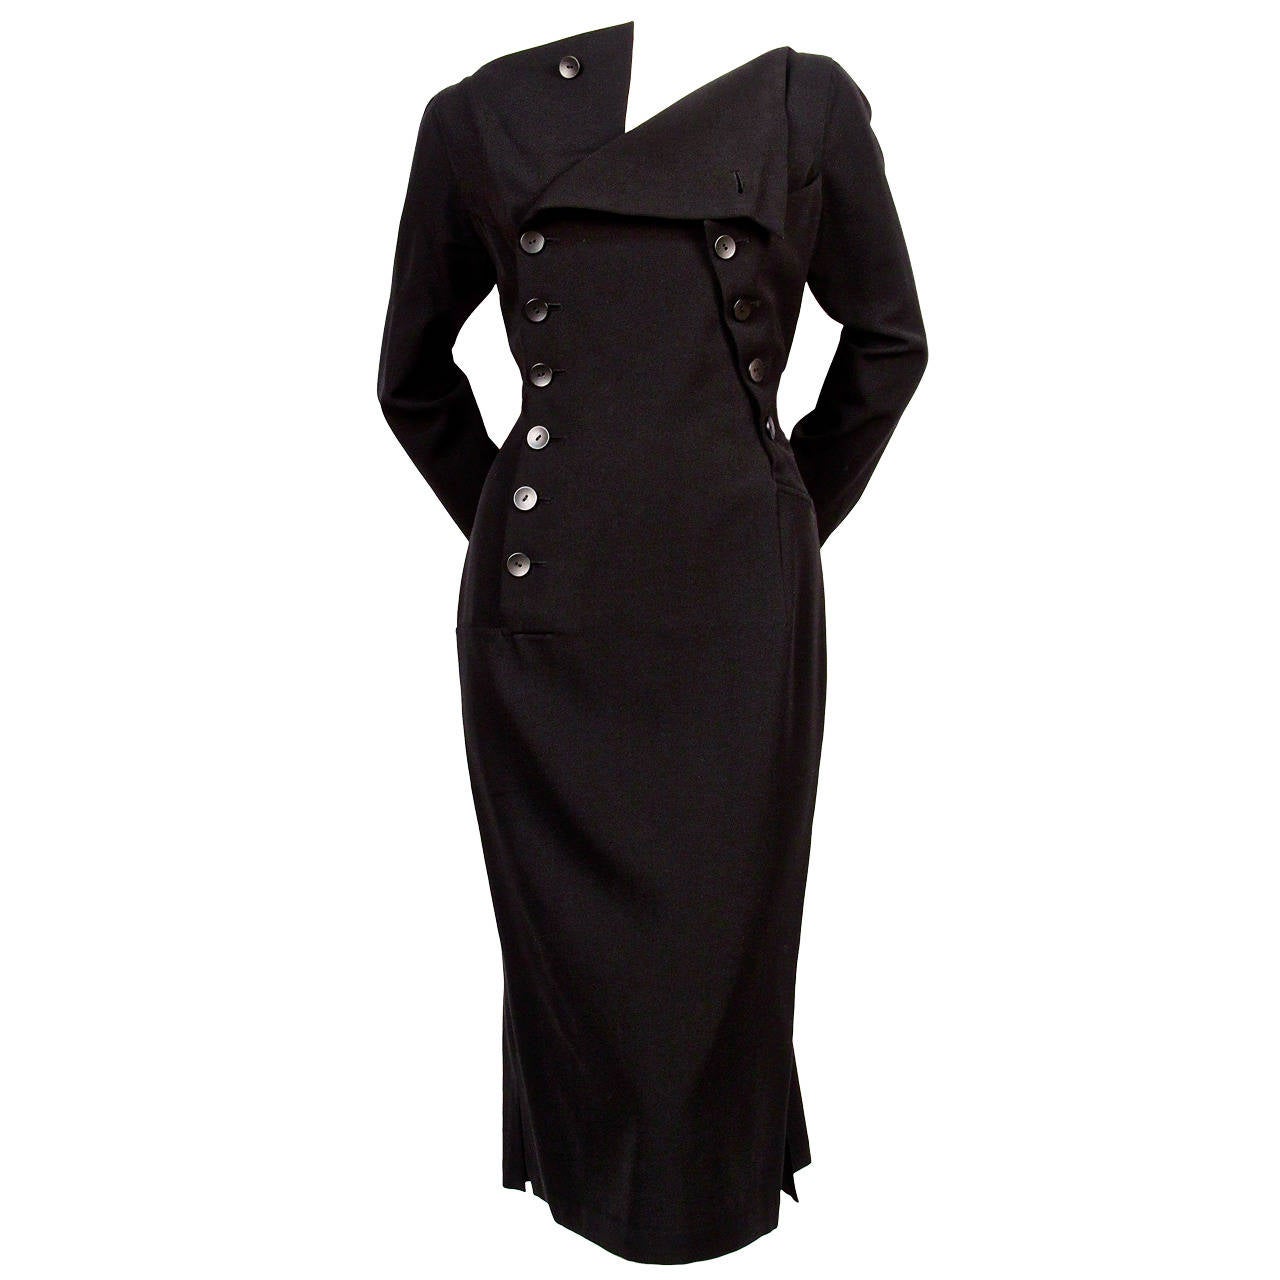 1980's YOHJI YAMAMOTO black dress with asymmetrical button closure